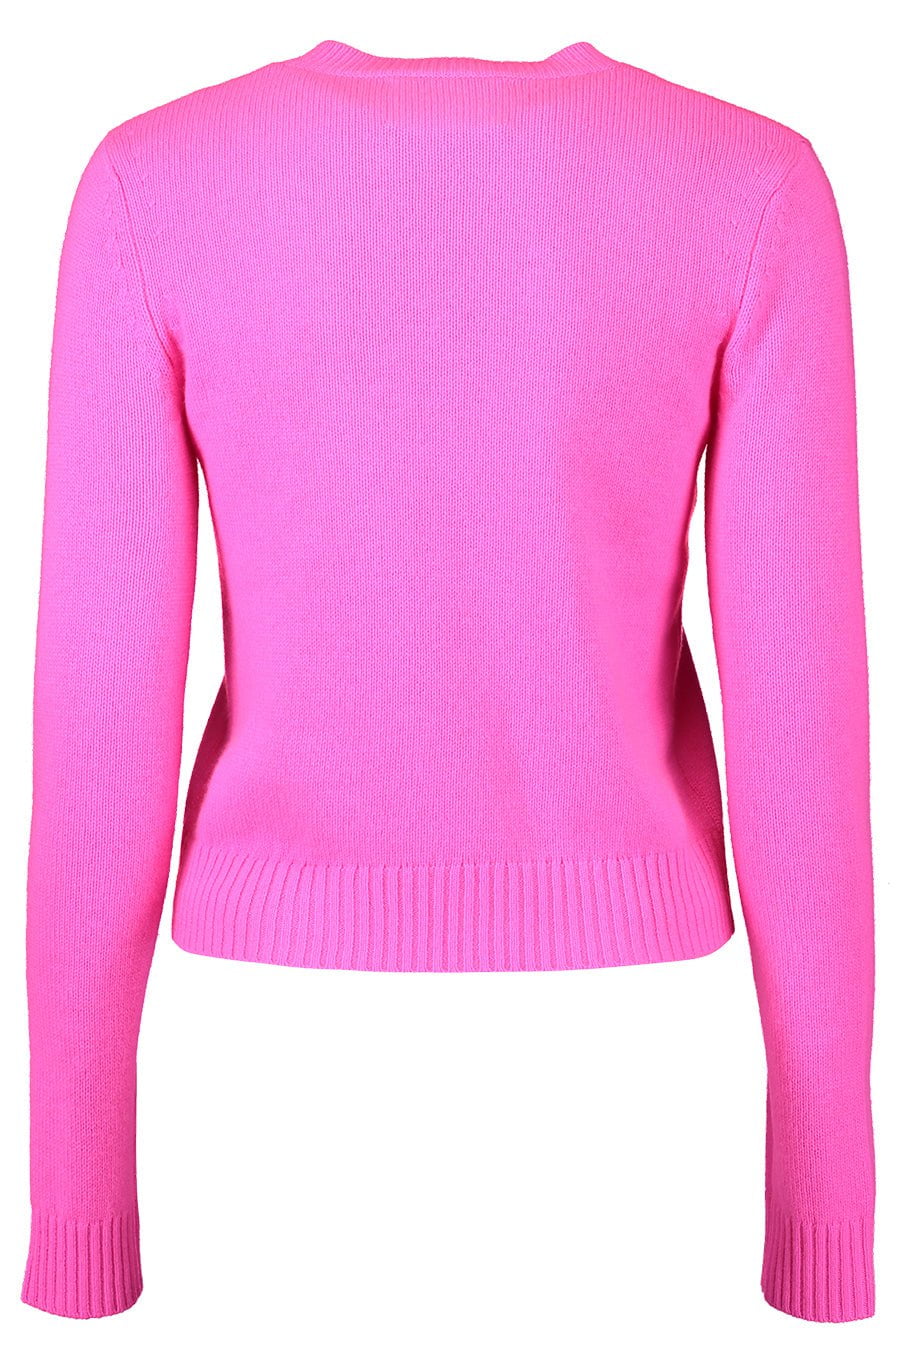 LISA YANG-Mable Sweater - Neon Pink-